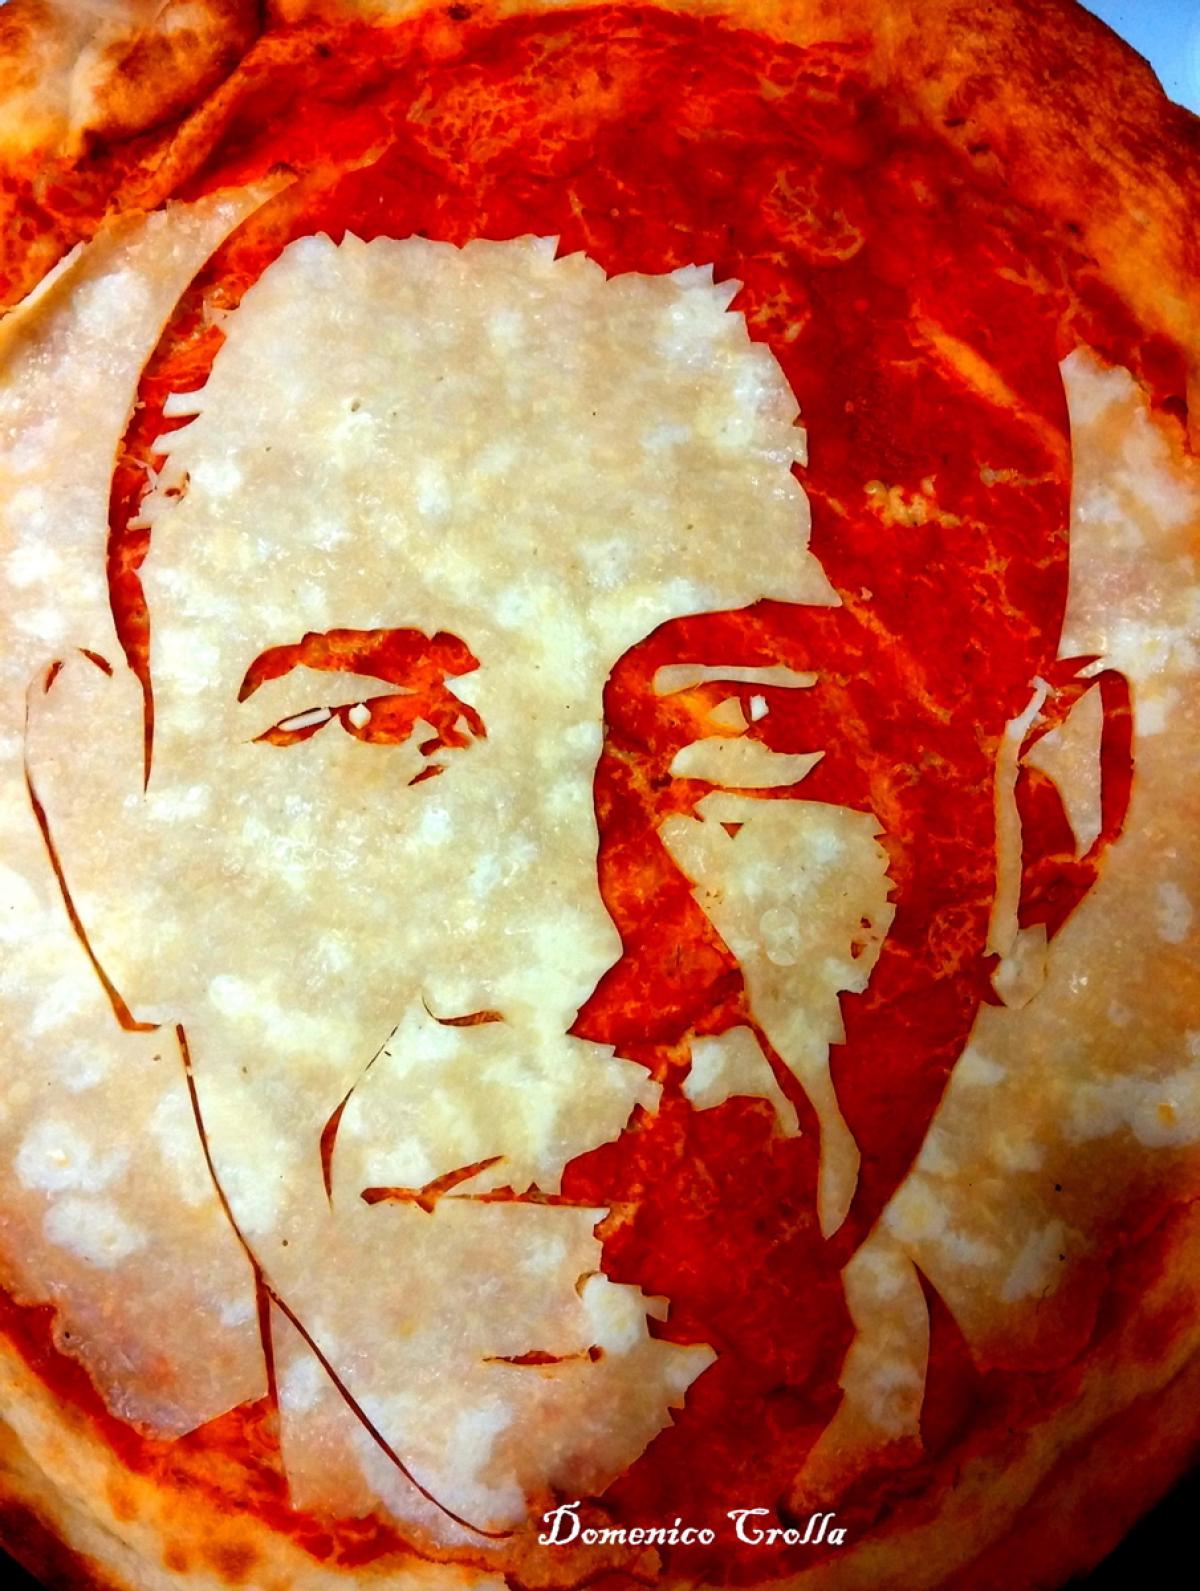 chef conquista instagram con retratos en pizzas president obama pizza portrait